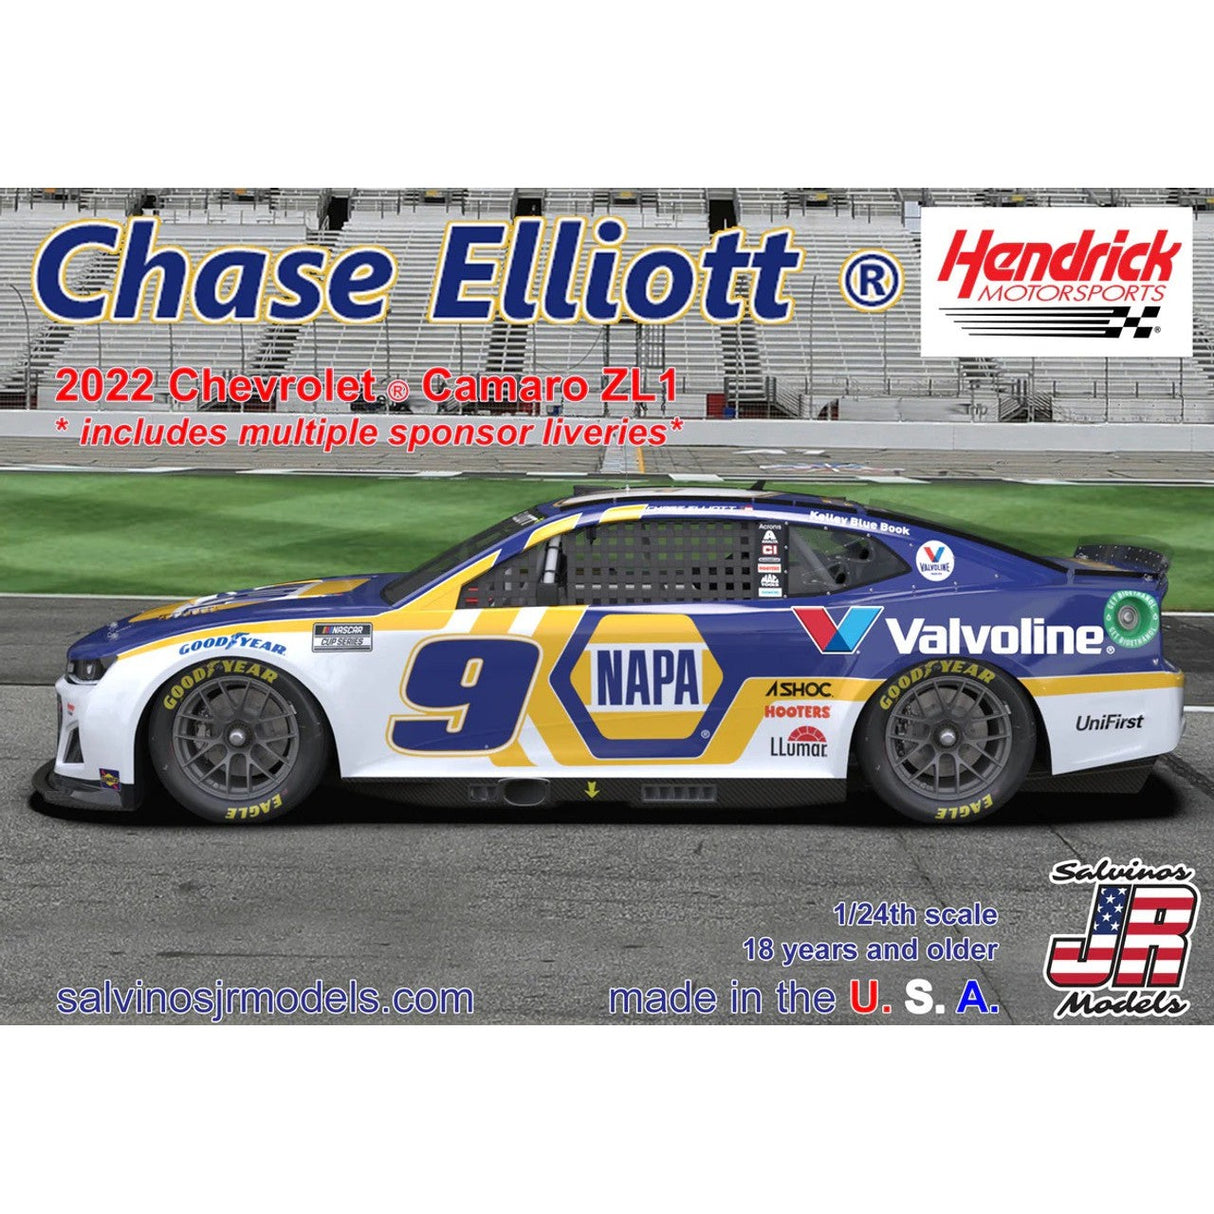 Salvinos JR Models Hendrick Motorsports 2022 NEXT GEN Chevrolet ® Camaro Chase Elliott #9 Includes multiple sponsor liveries